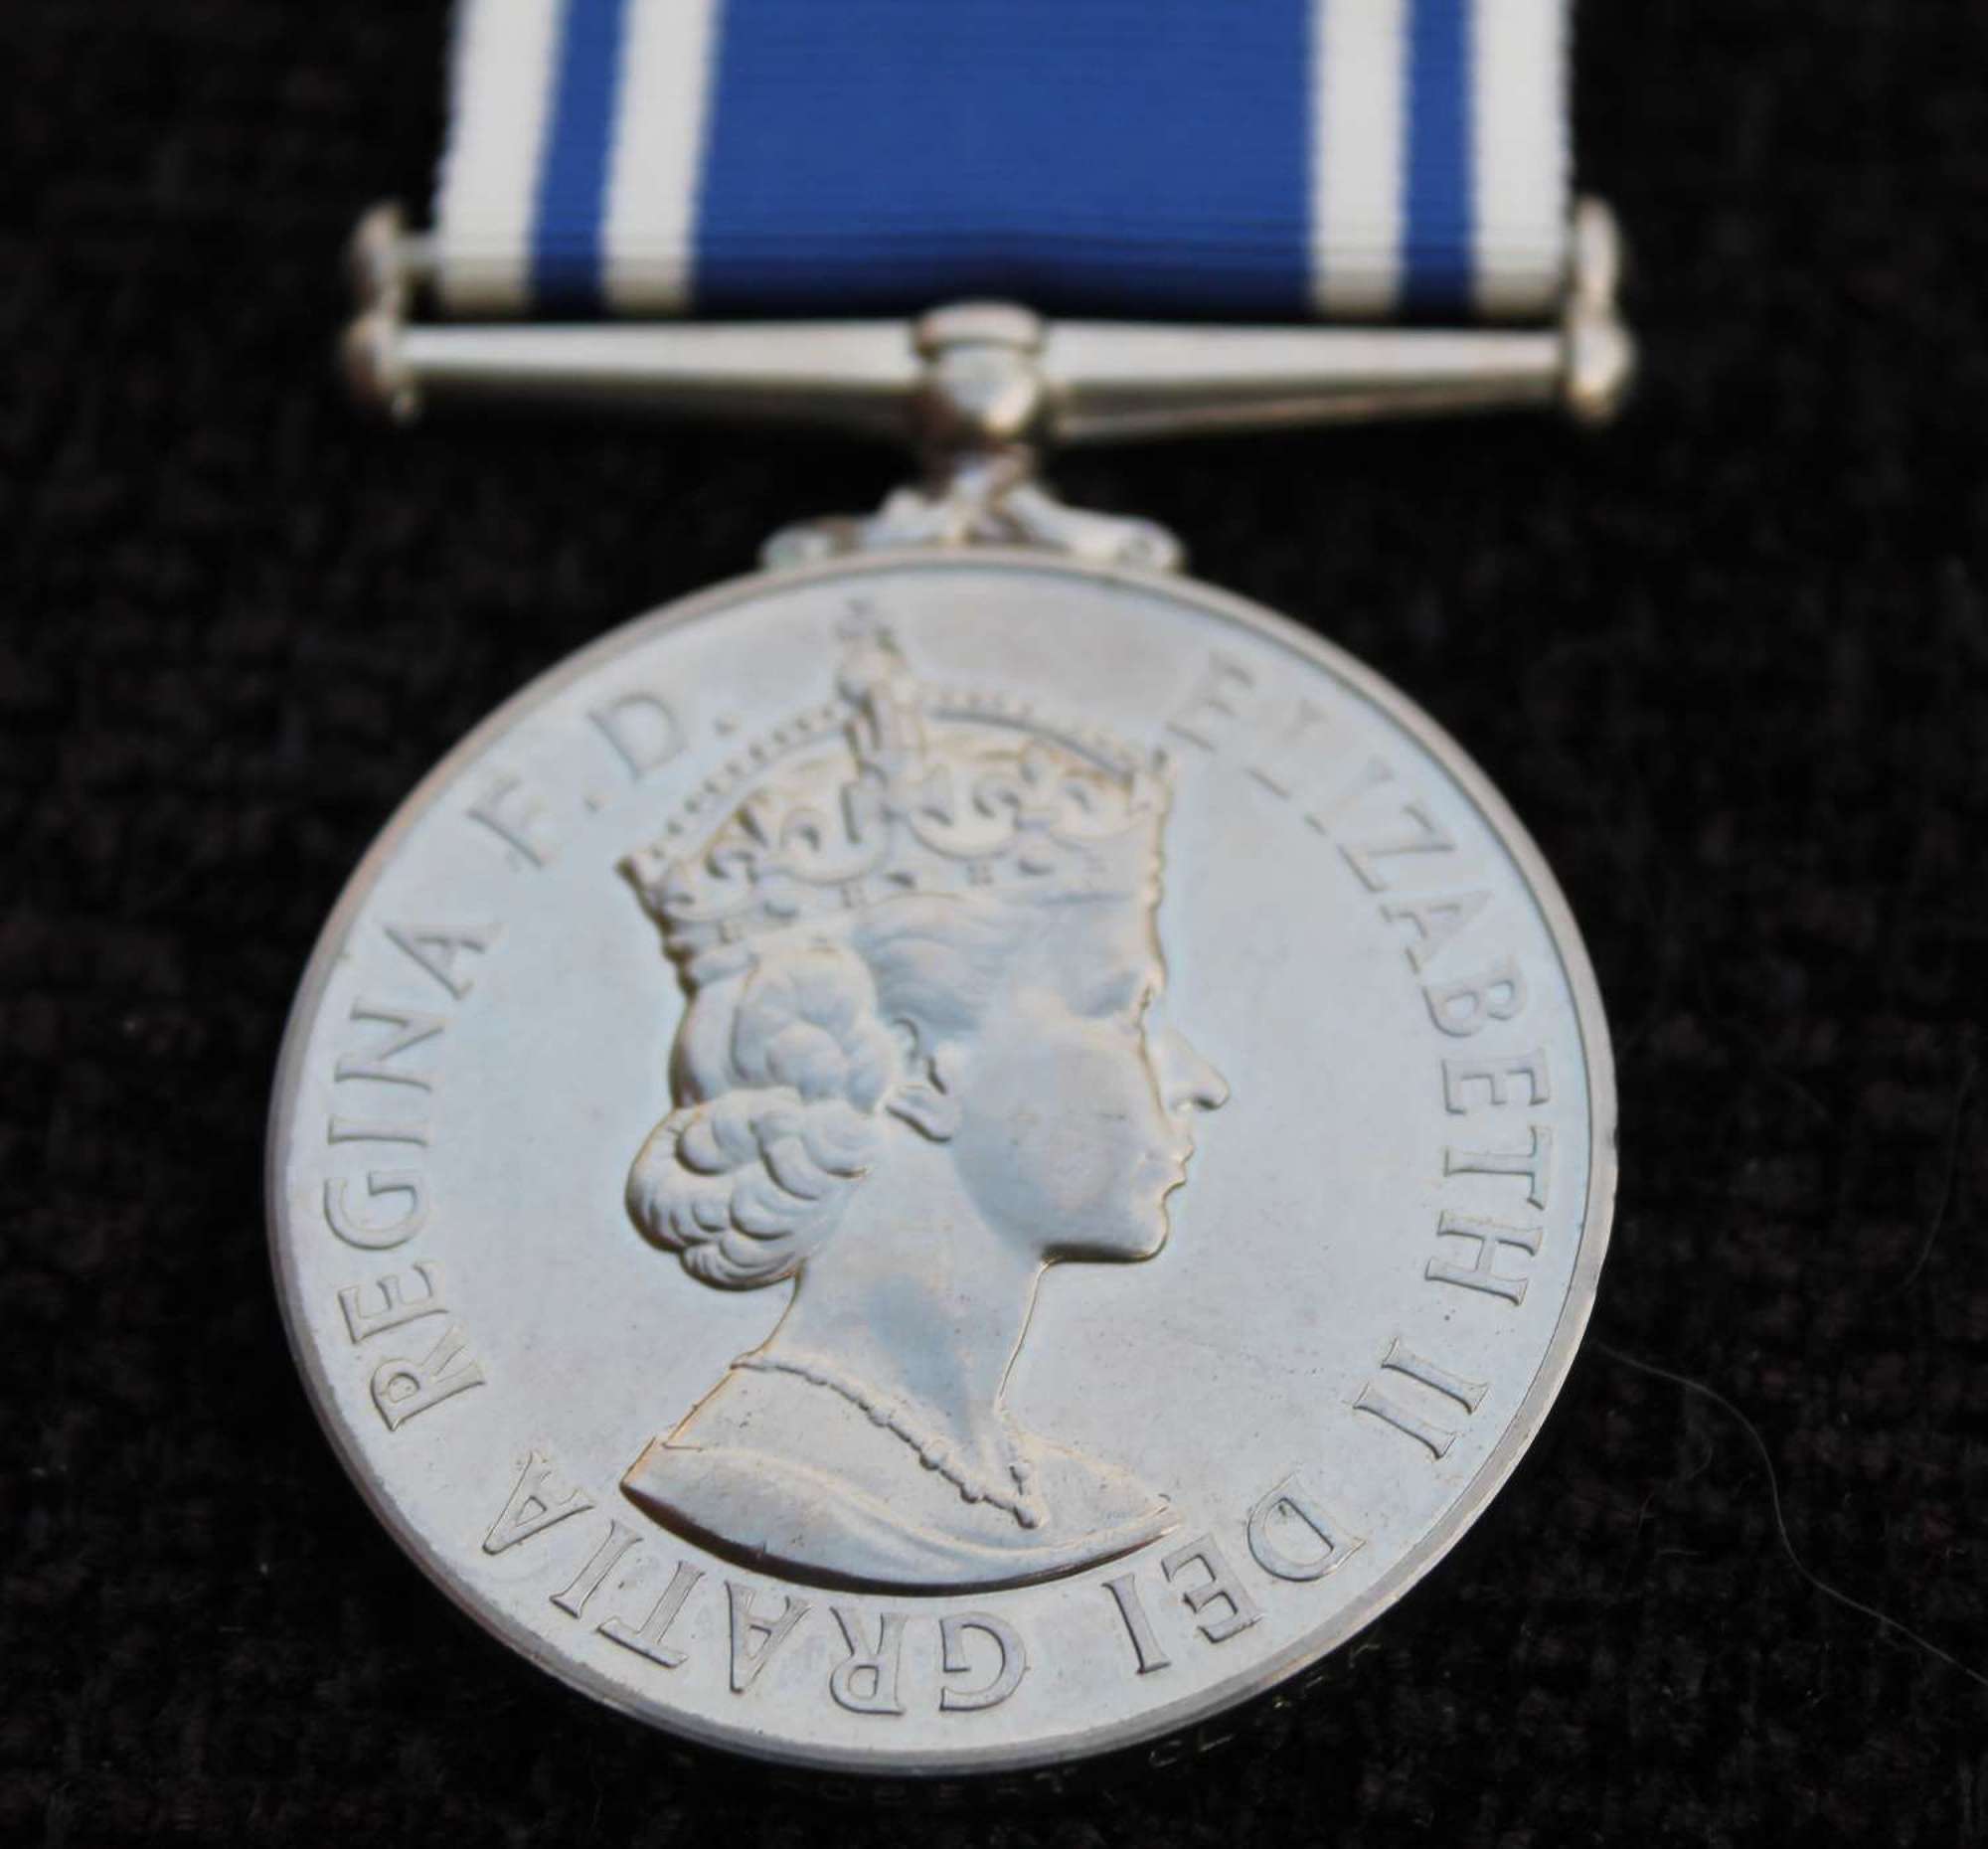 Police Long Service Medal